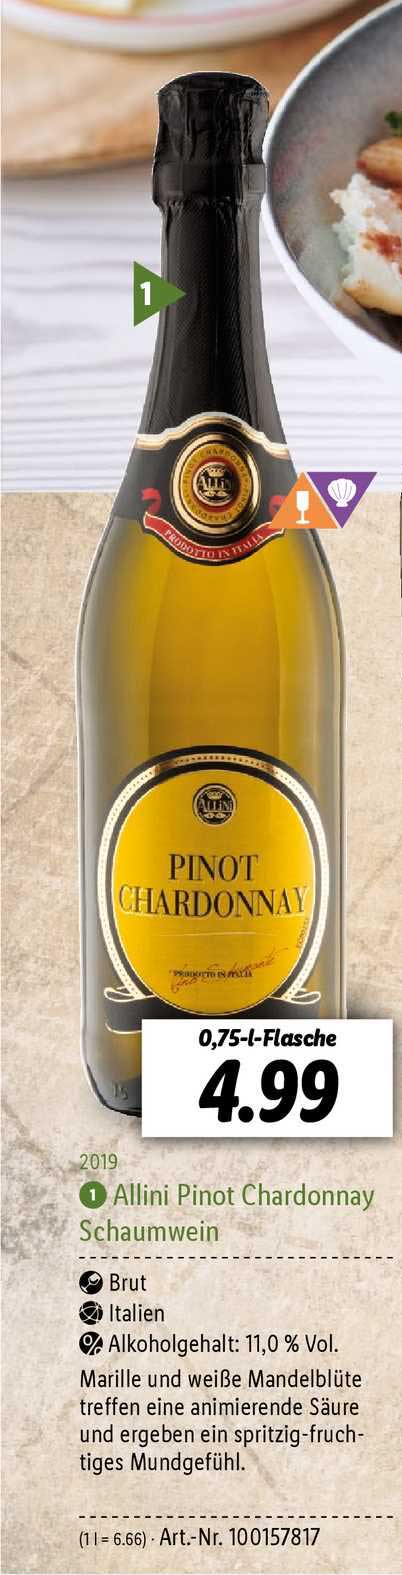 Allini Pinot Chardonnay Schaumwein Angebot bei Lidl | Champagner & Sekt